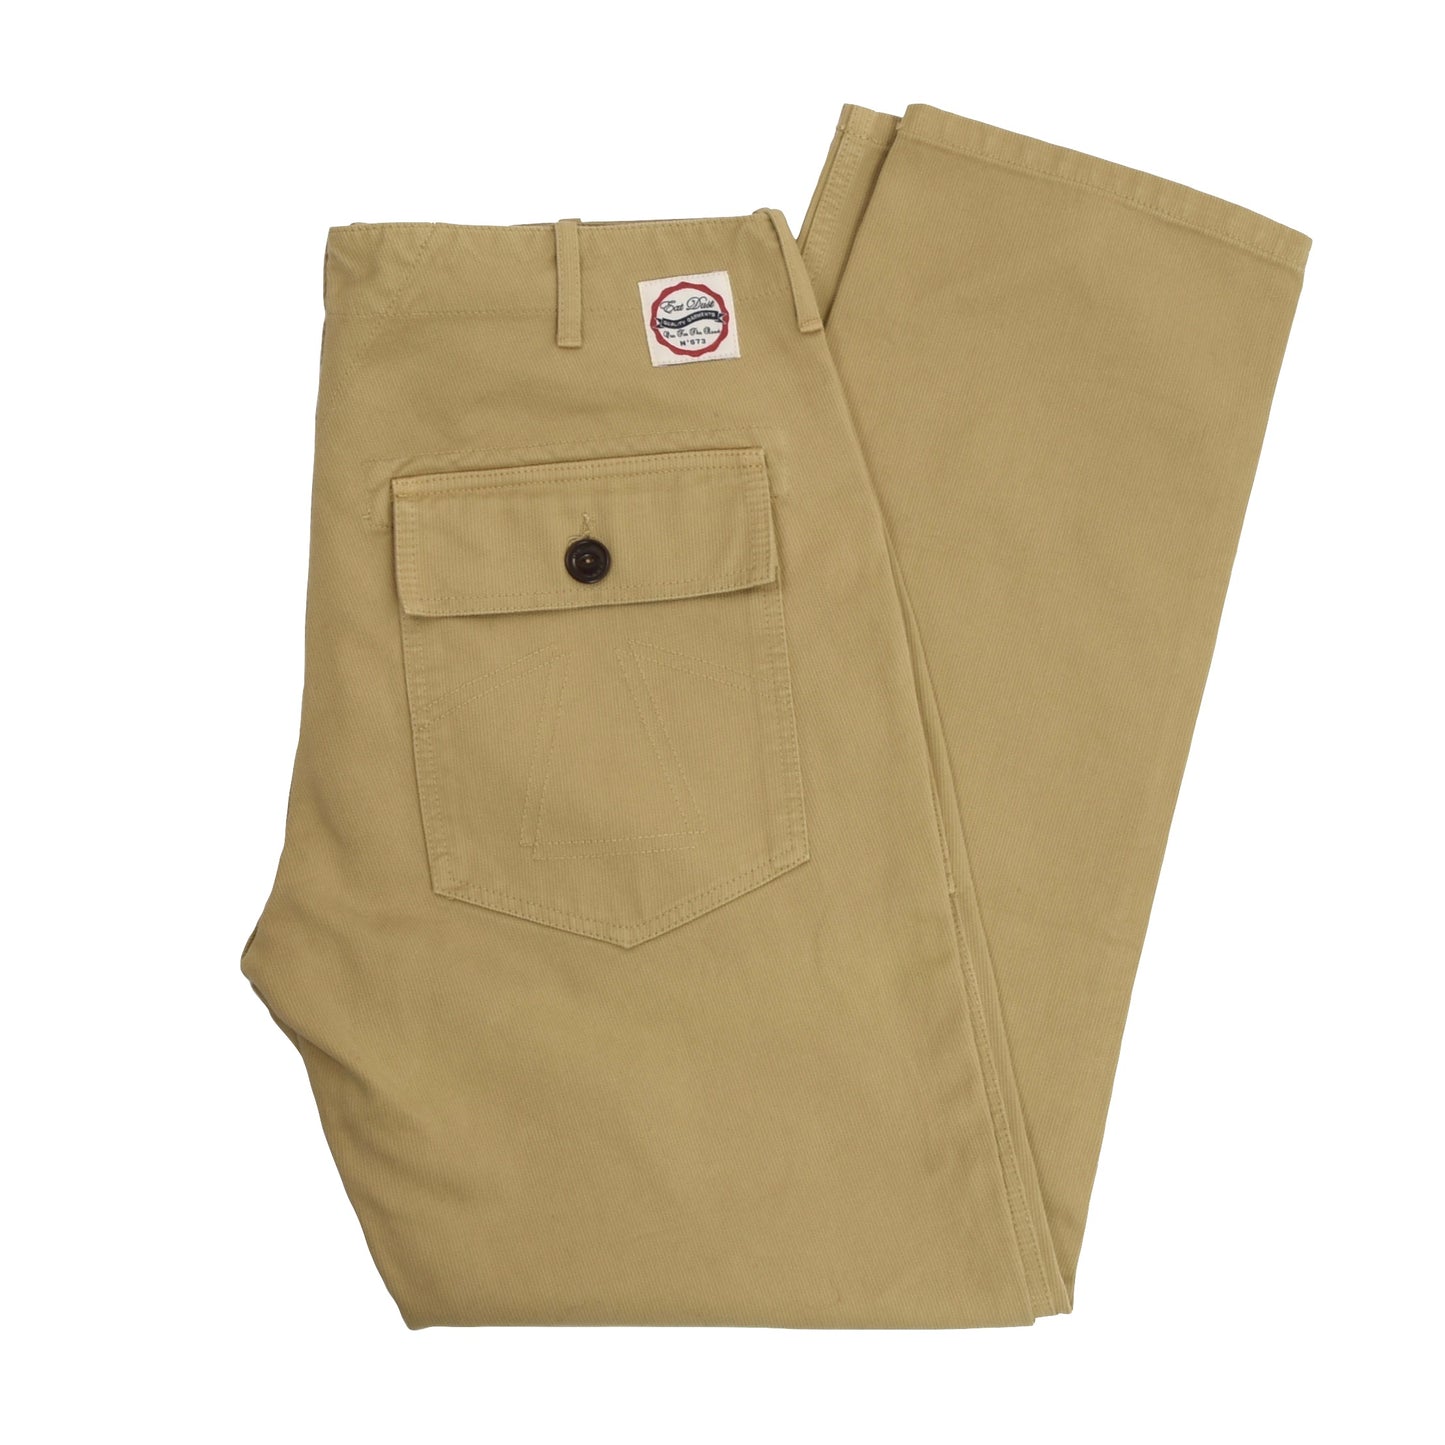 Eat Dust Workwear Cotton Pants Size W34 - Tan/Yellow